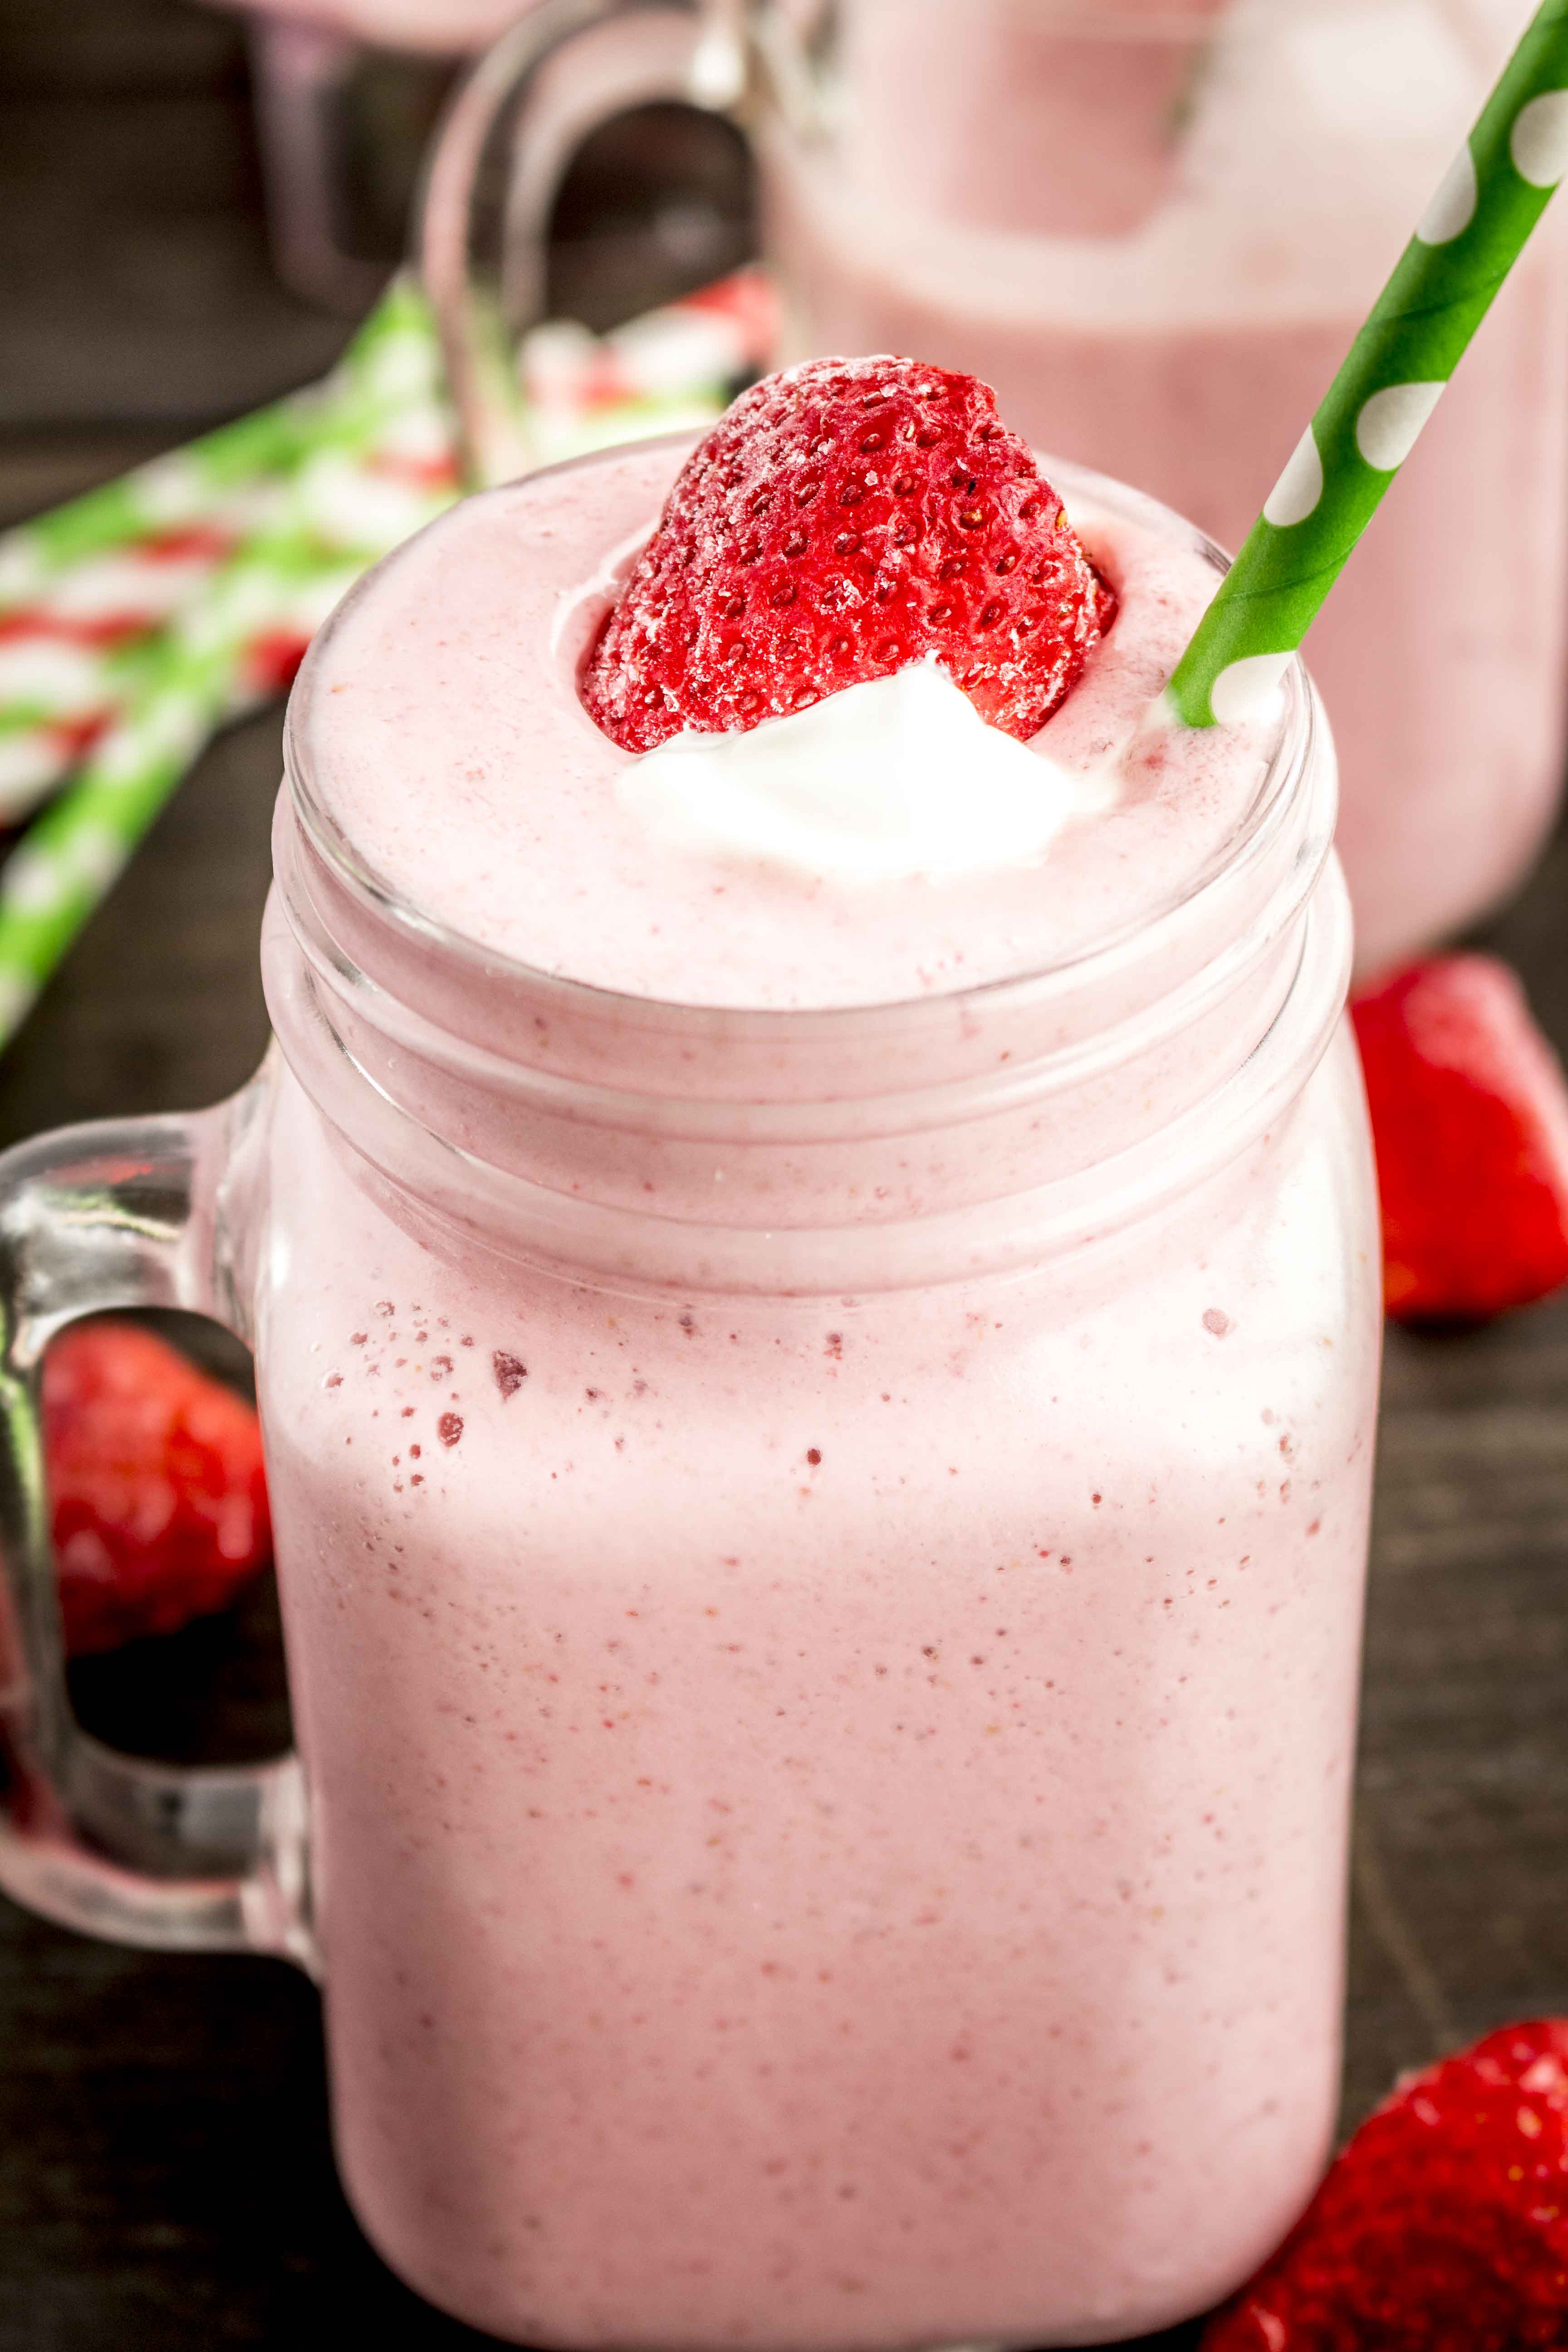 Strawberry Lassi - Refreshing Yogurt-Based Drink from India (gluten free)